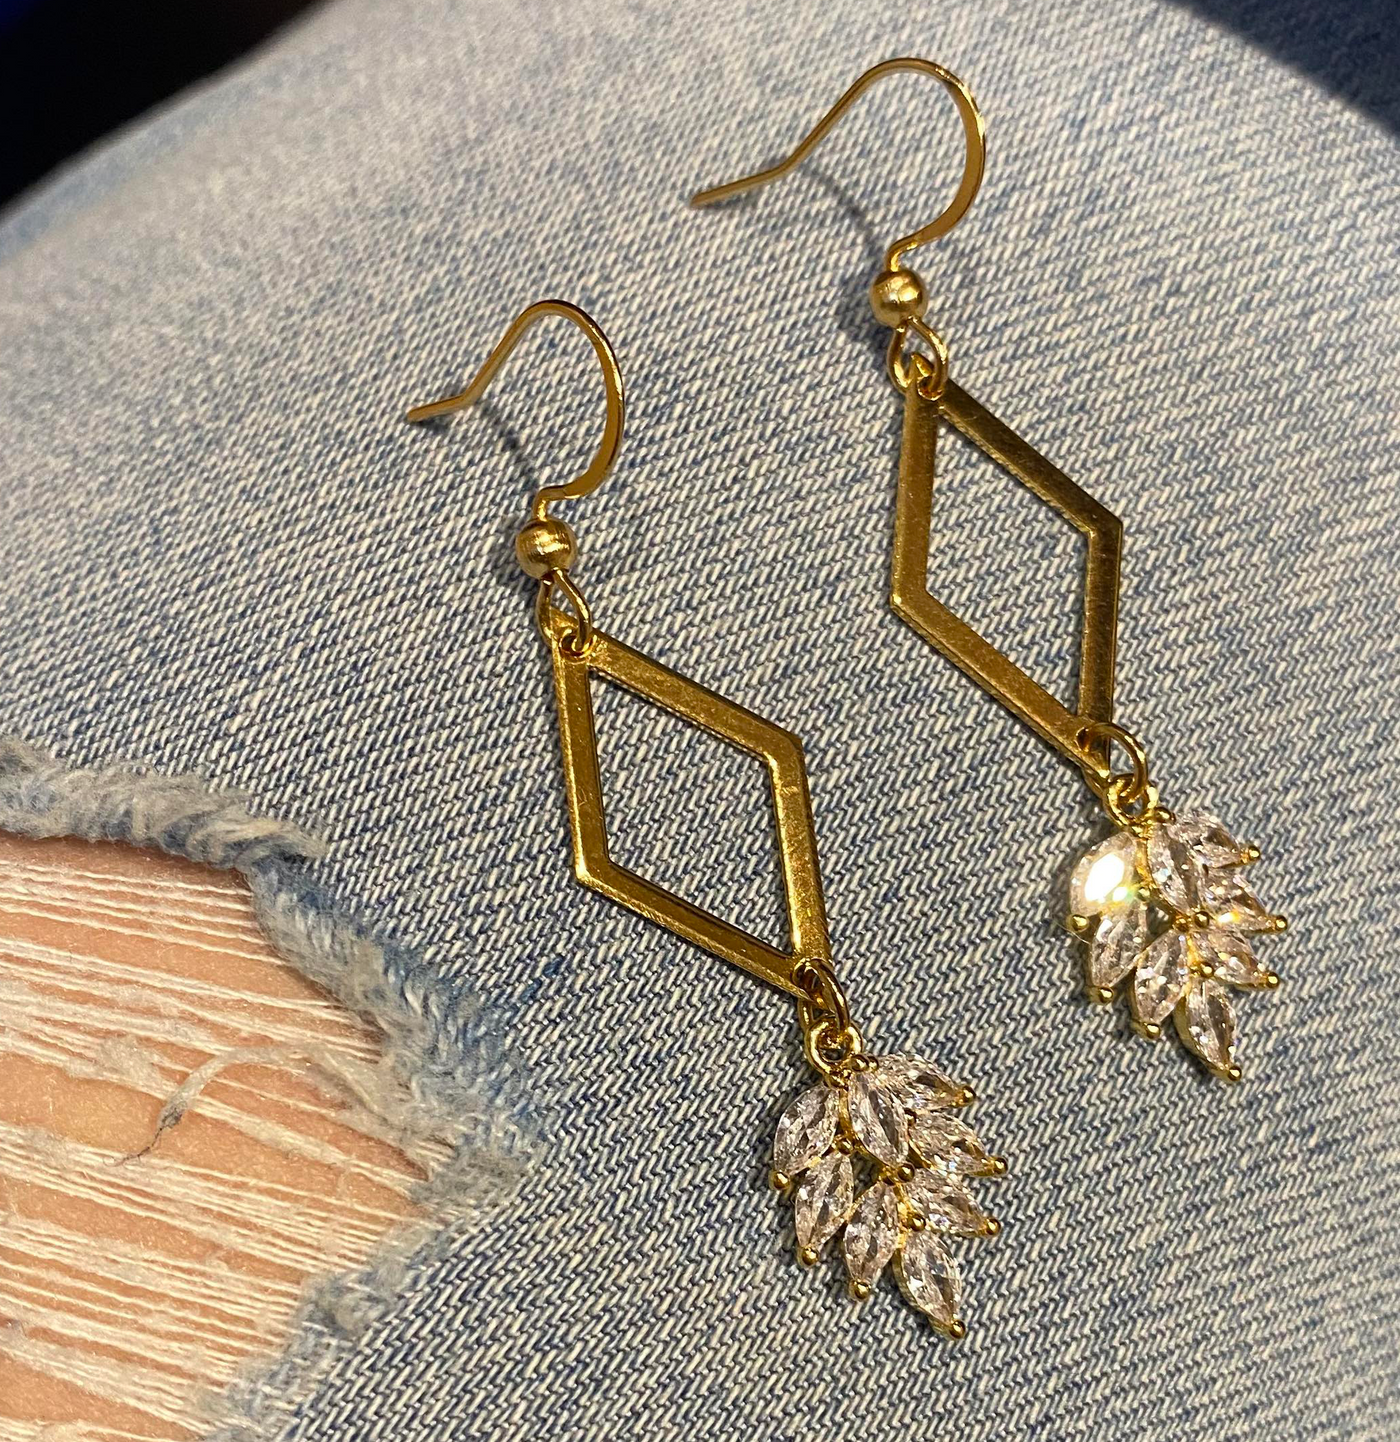 Chicks gold or silver diamond earrings